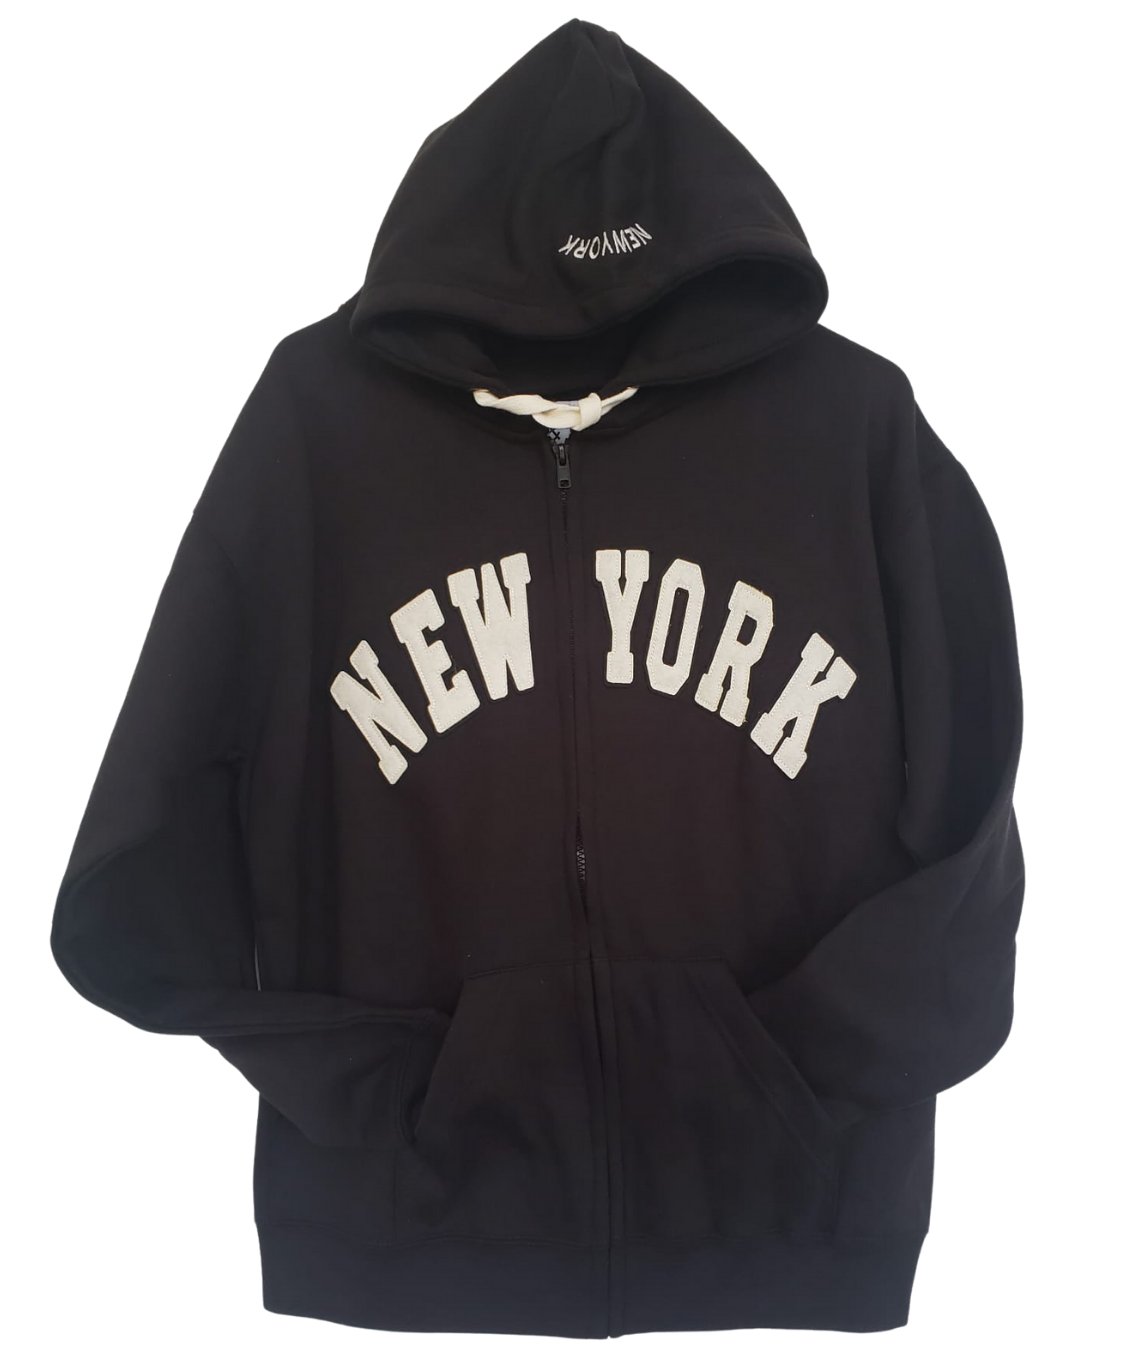 Men's New York City Zippered Hoodie Sweatshirt Black Navy Pink Retro Style